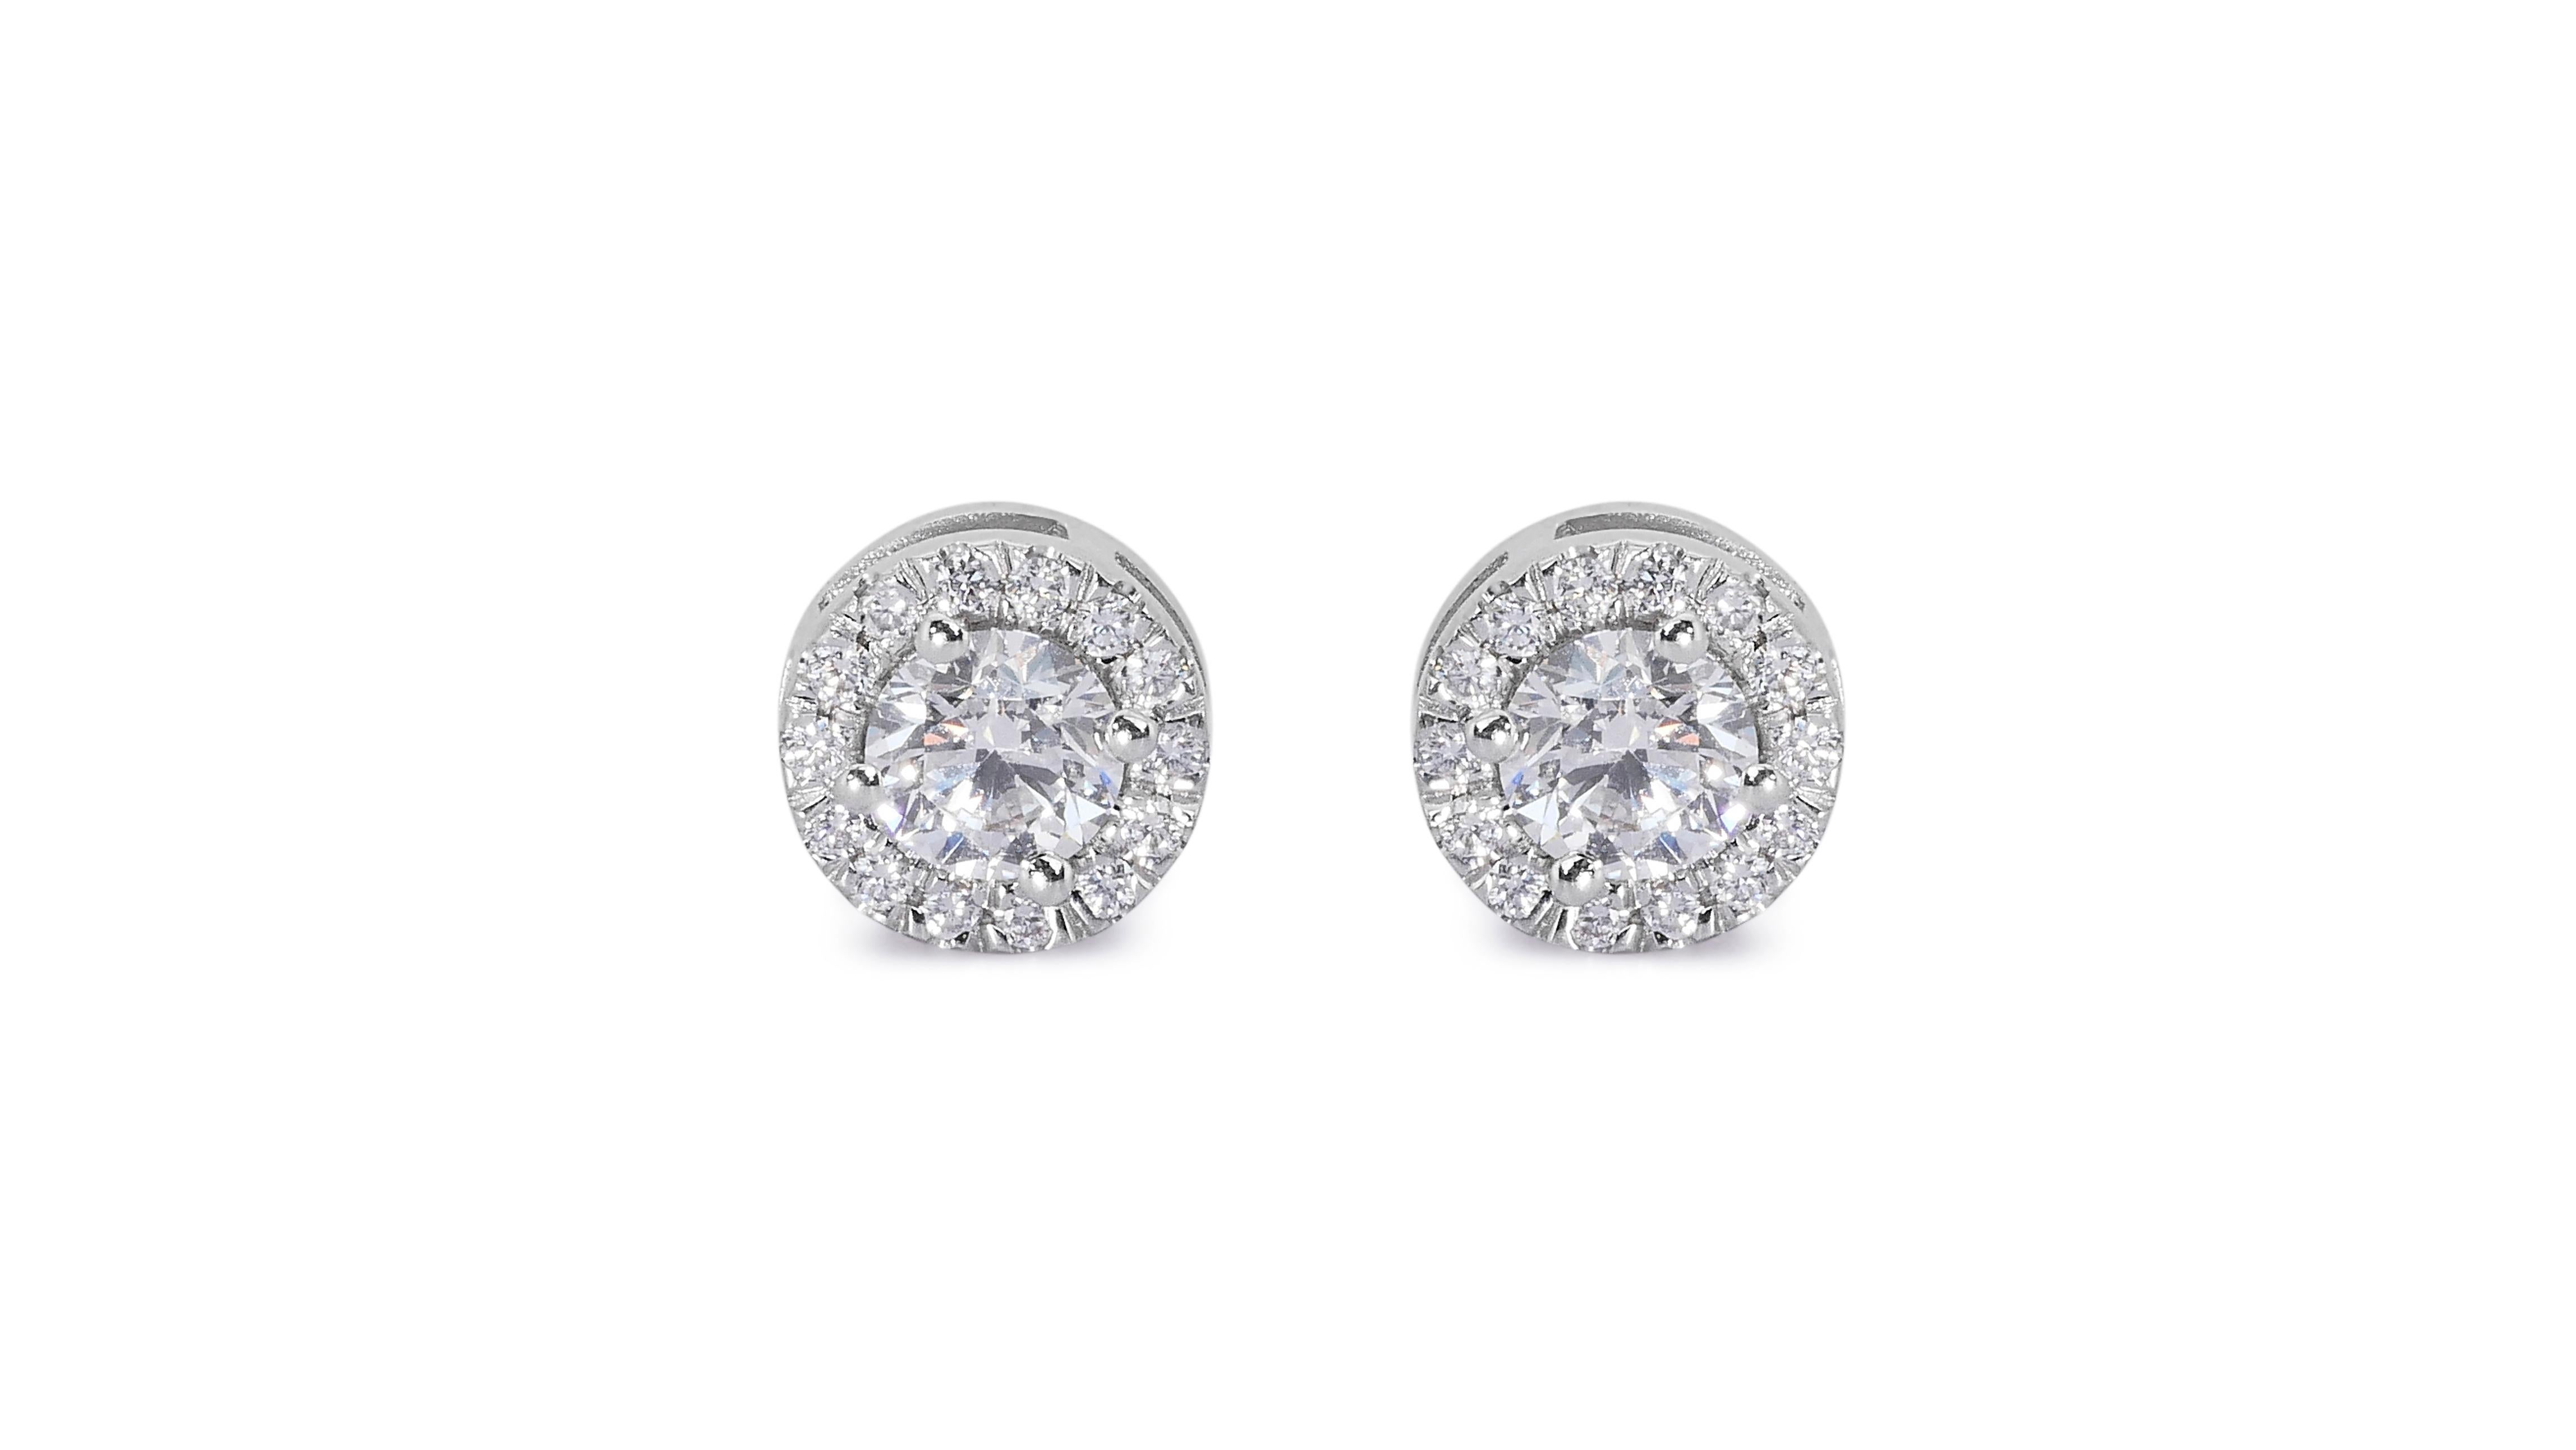 Women's Glamorous 18k White Gold Halo Earrings w/ 1.05 Carat Natural Diamonds GIA Cert For Sale